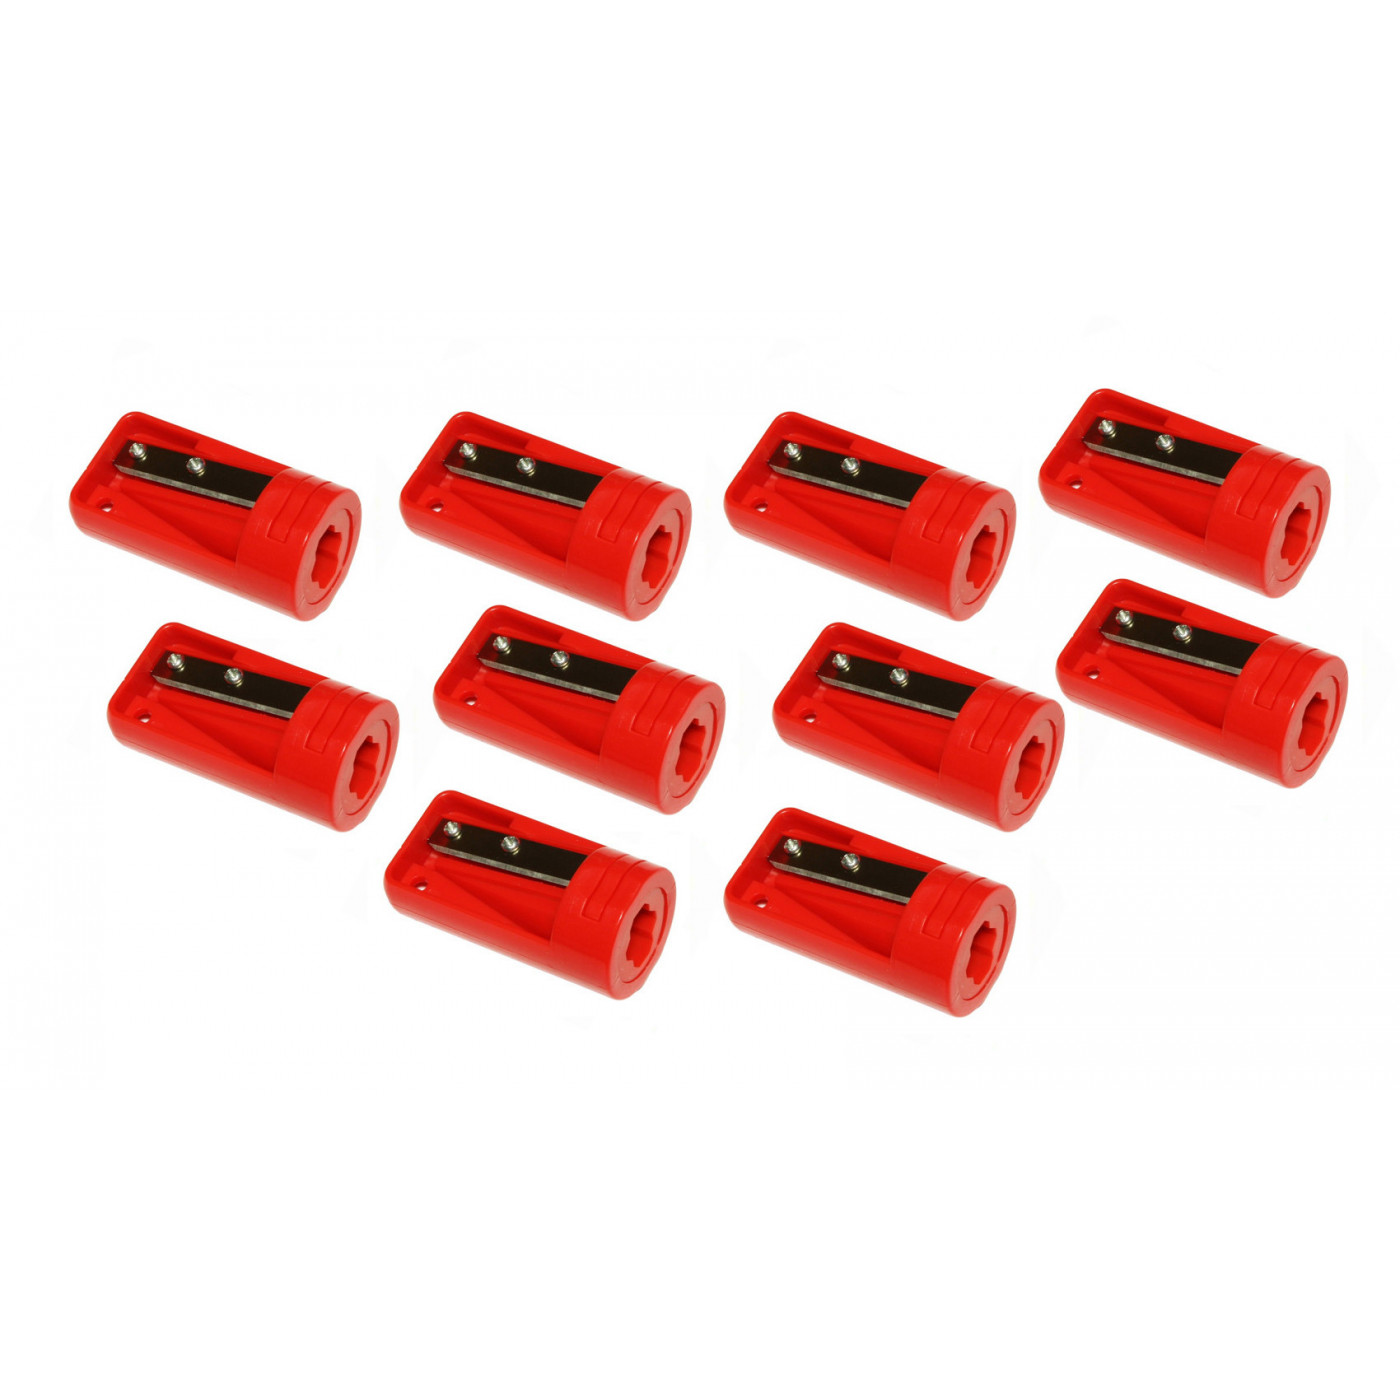 Set of 10 carpenters pencil sharpeners, red